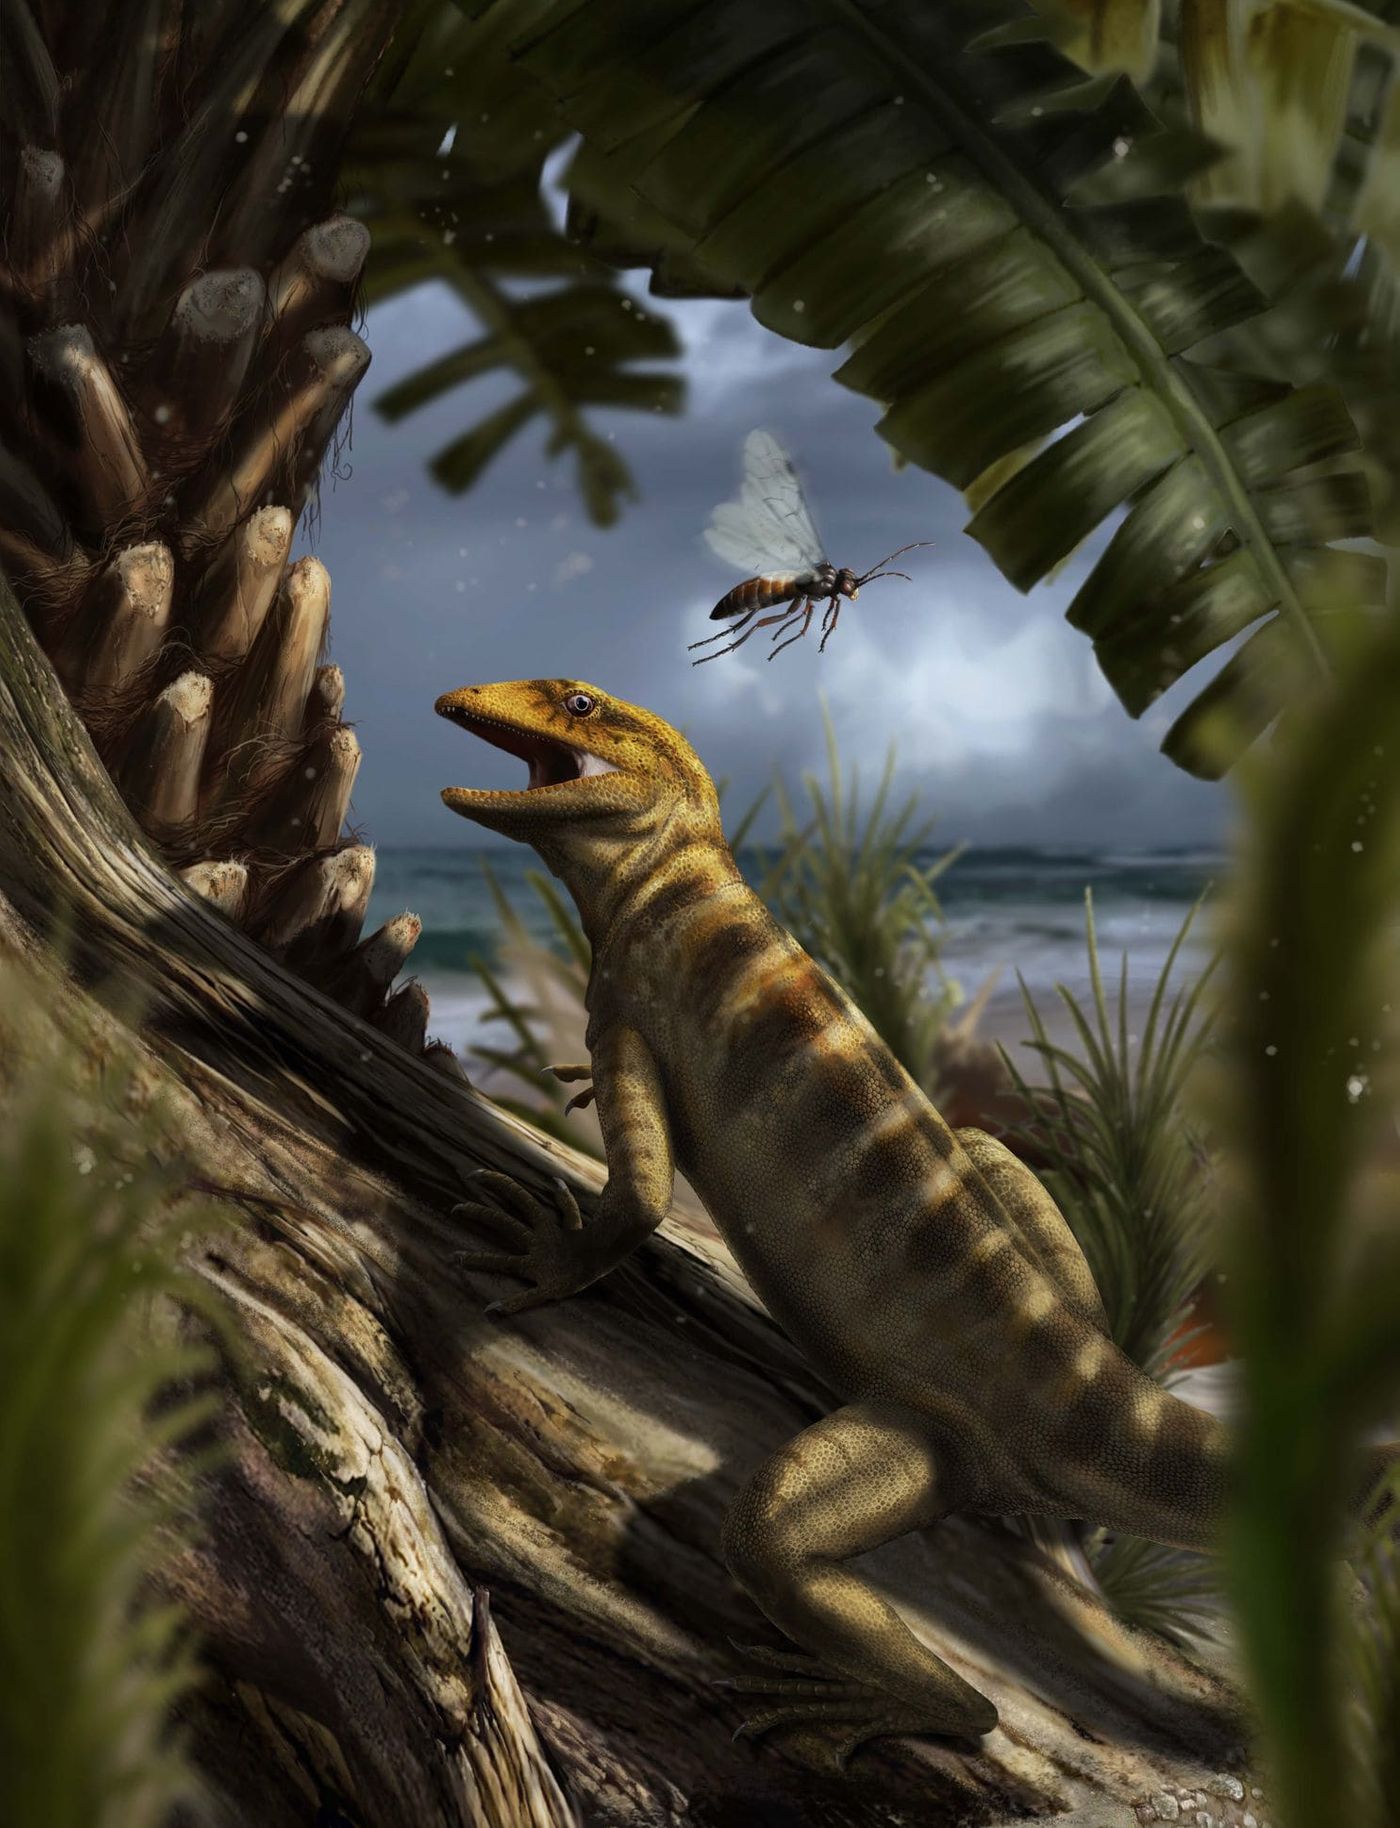 An artist's impression of Megachirella, the 240-million-year-old lizard.